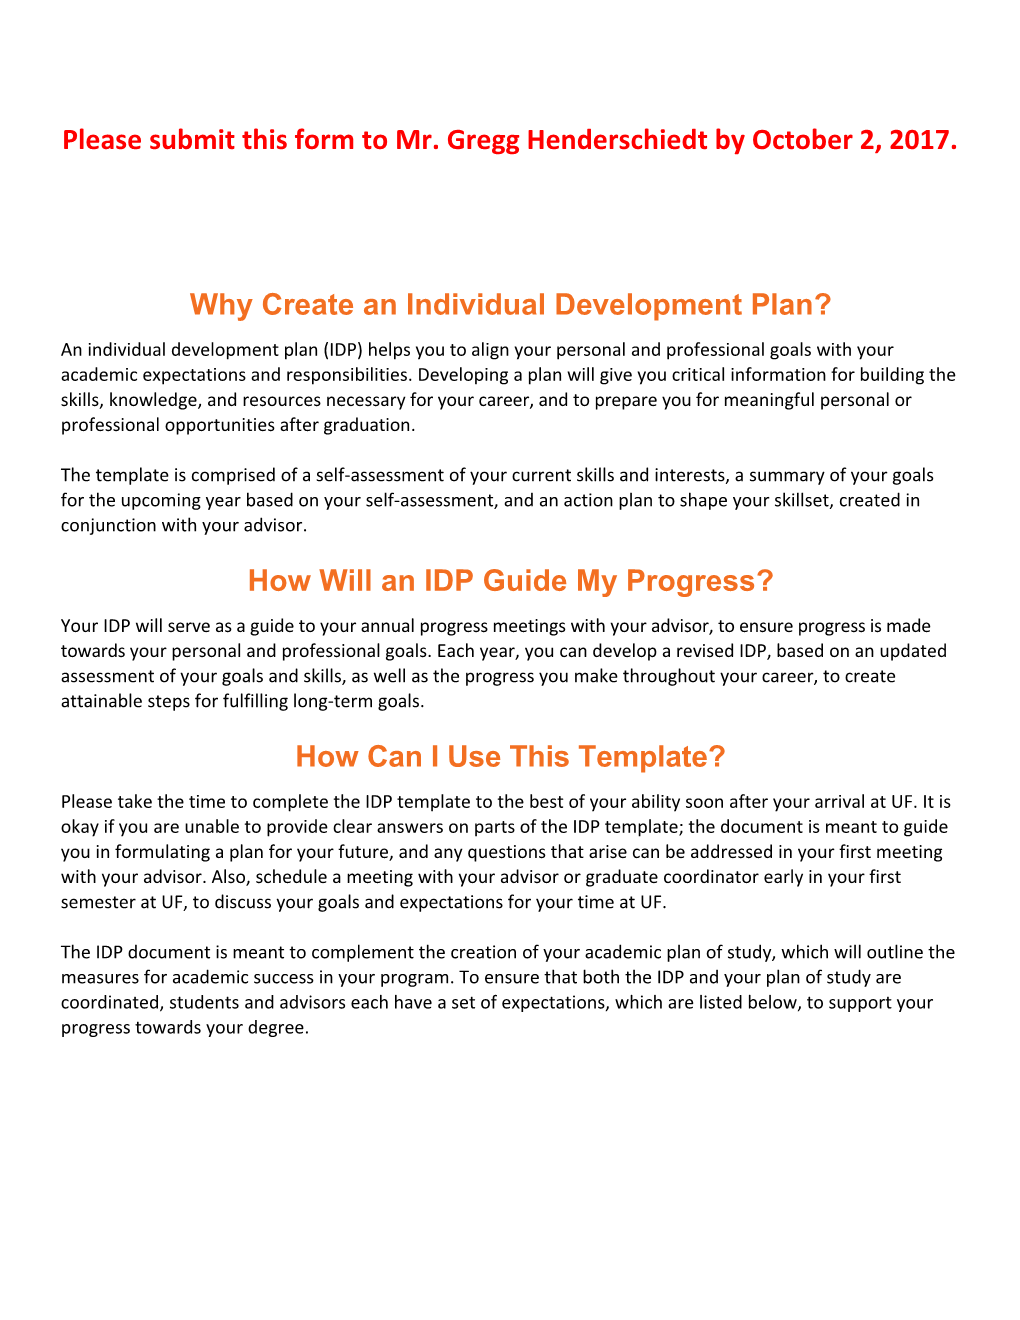 Why Create an Individual Development Plan?